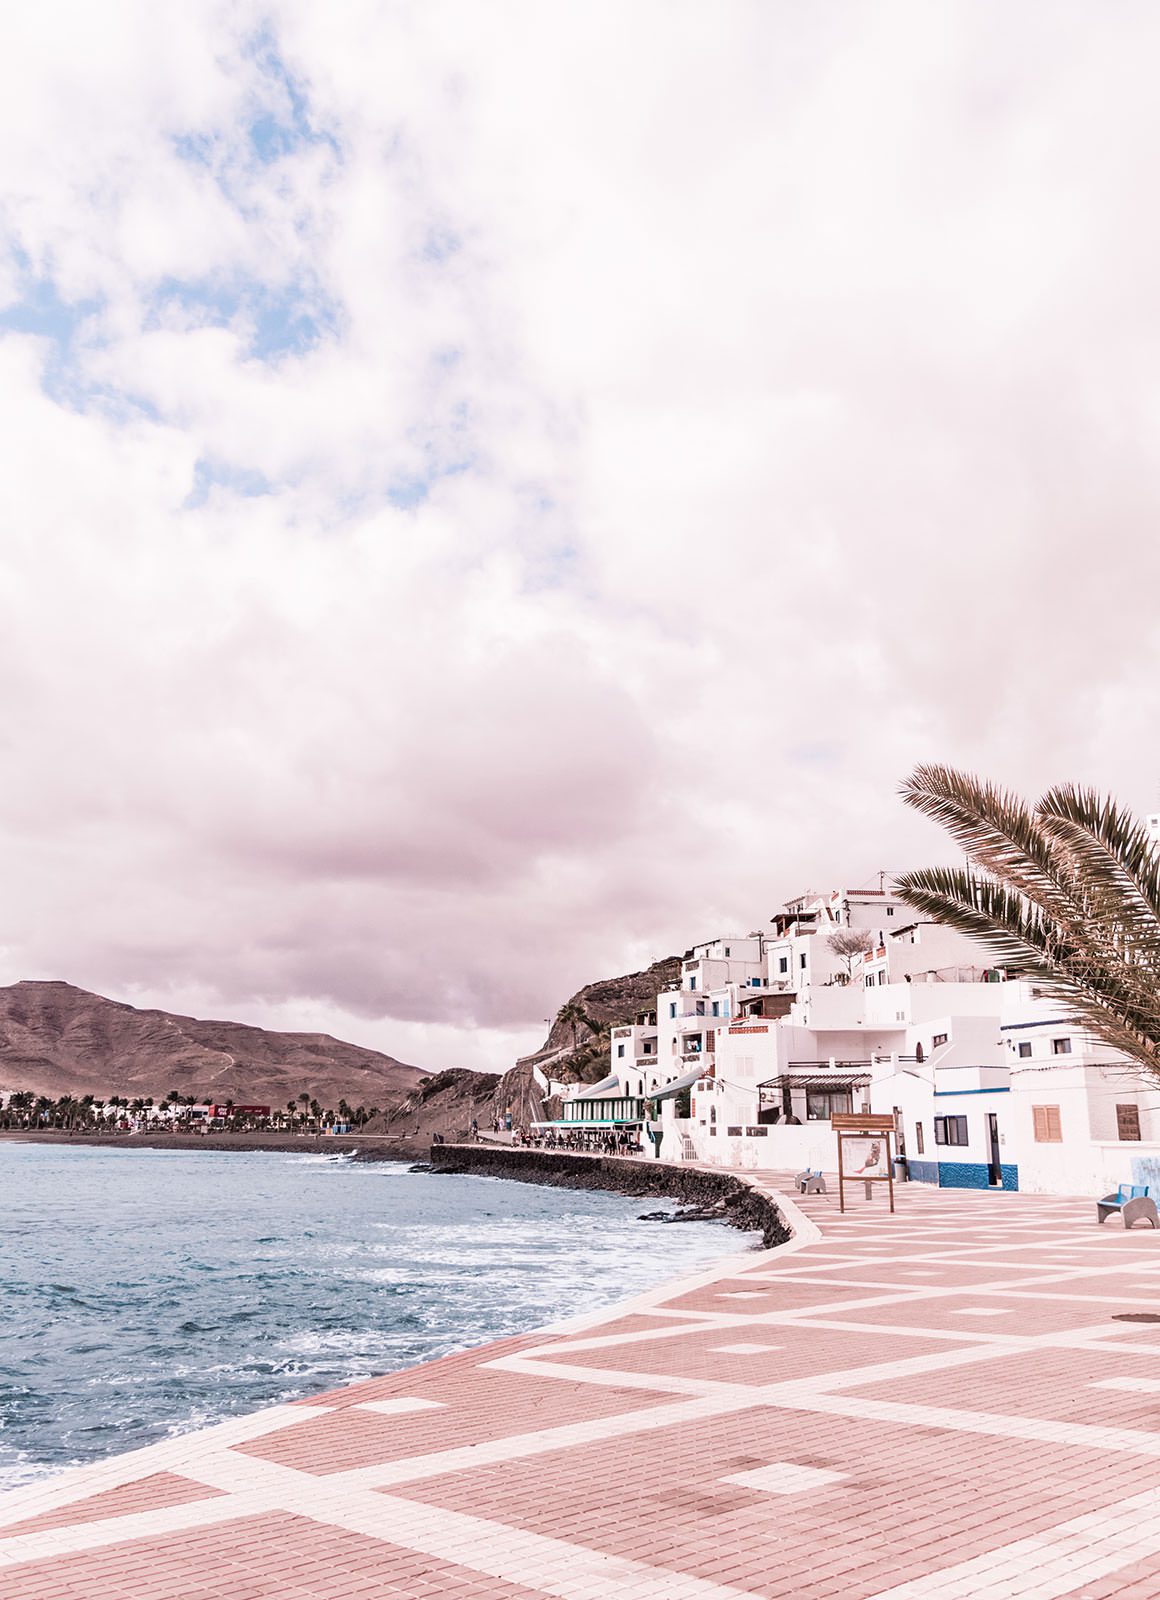 Island of Fuerteventura, Canary Islands